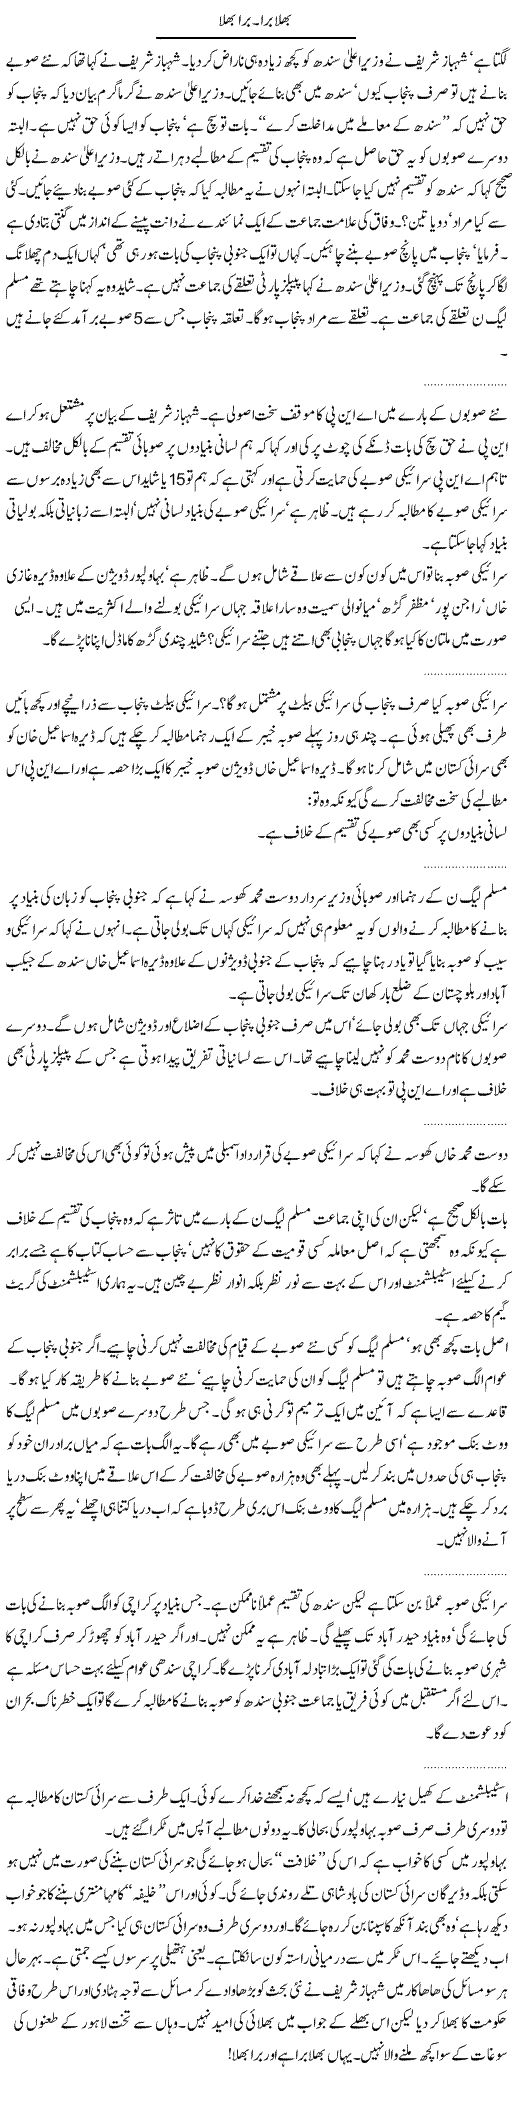 New Provinces Express Column Abdullah Tariq 26 April 2011